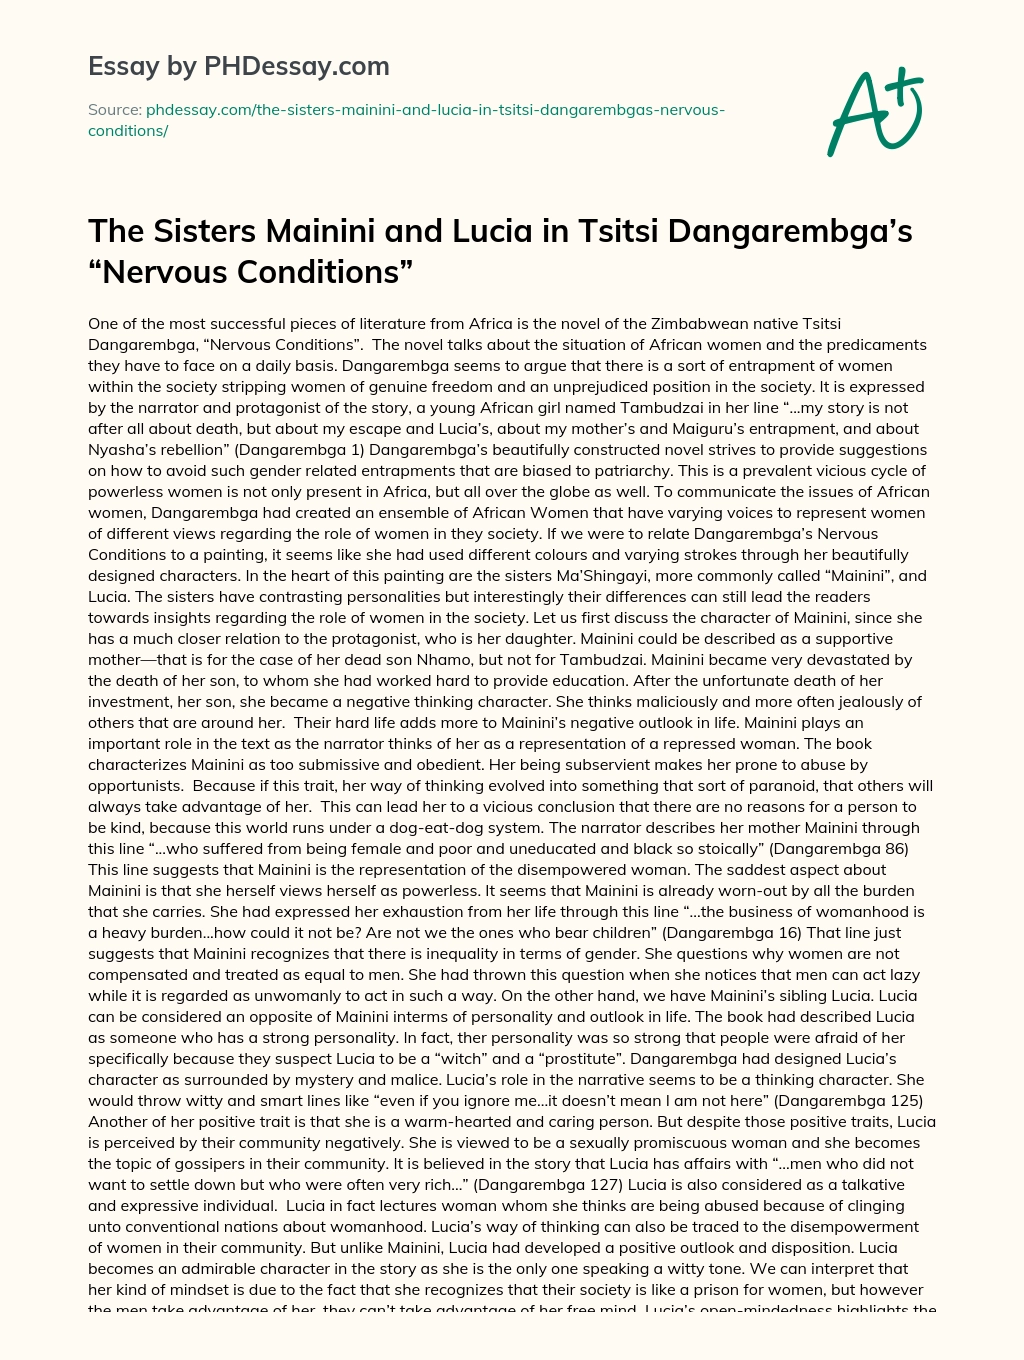 The Sisters Mainini and Lucia in Tsitsi Dangarembga’s “Nervous Conditions” essay